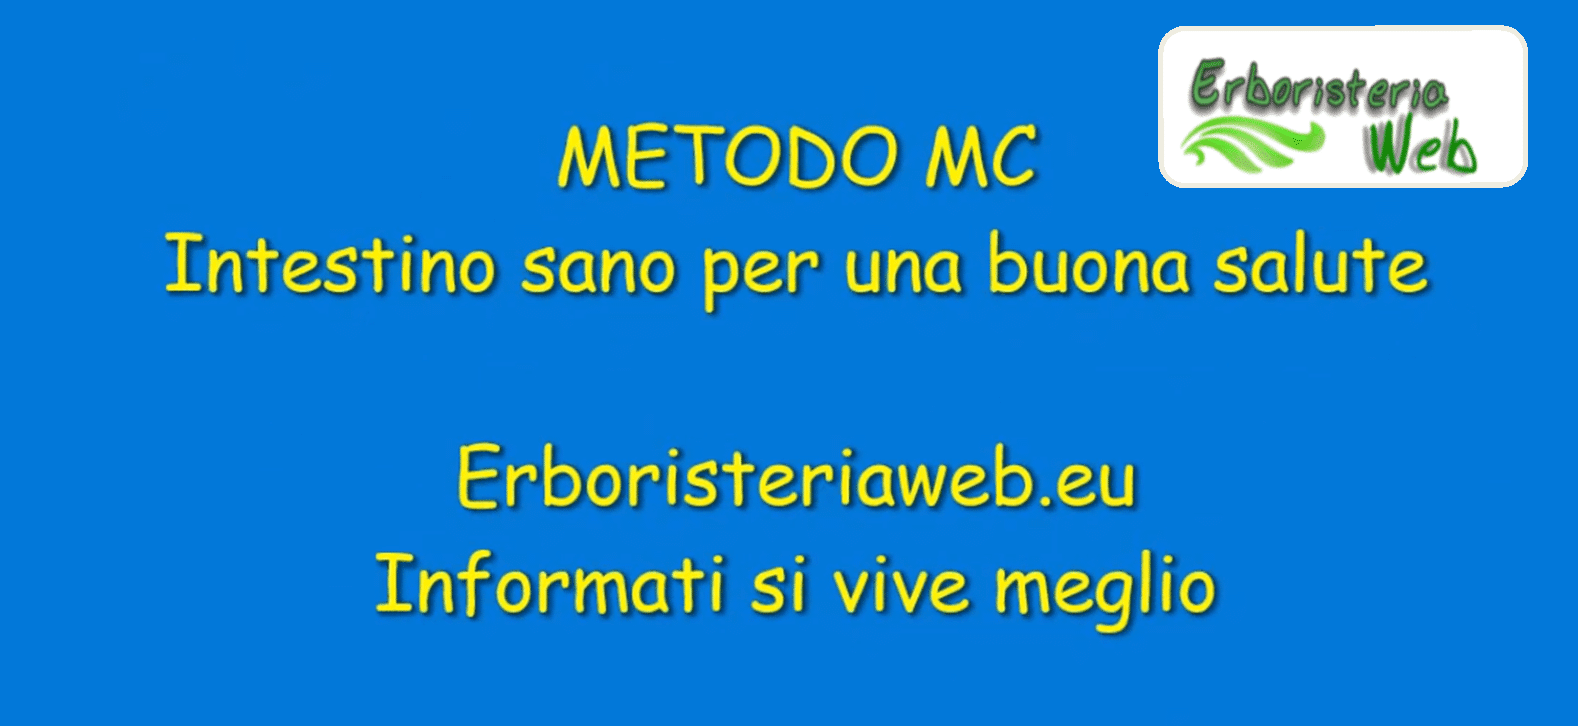 erbristeria web Metodo Mc